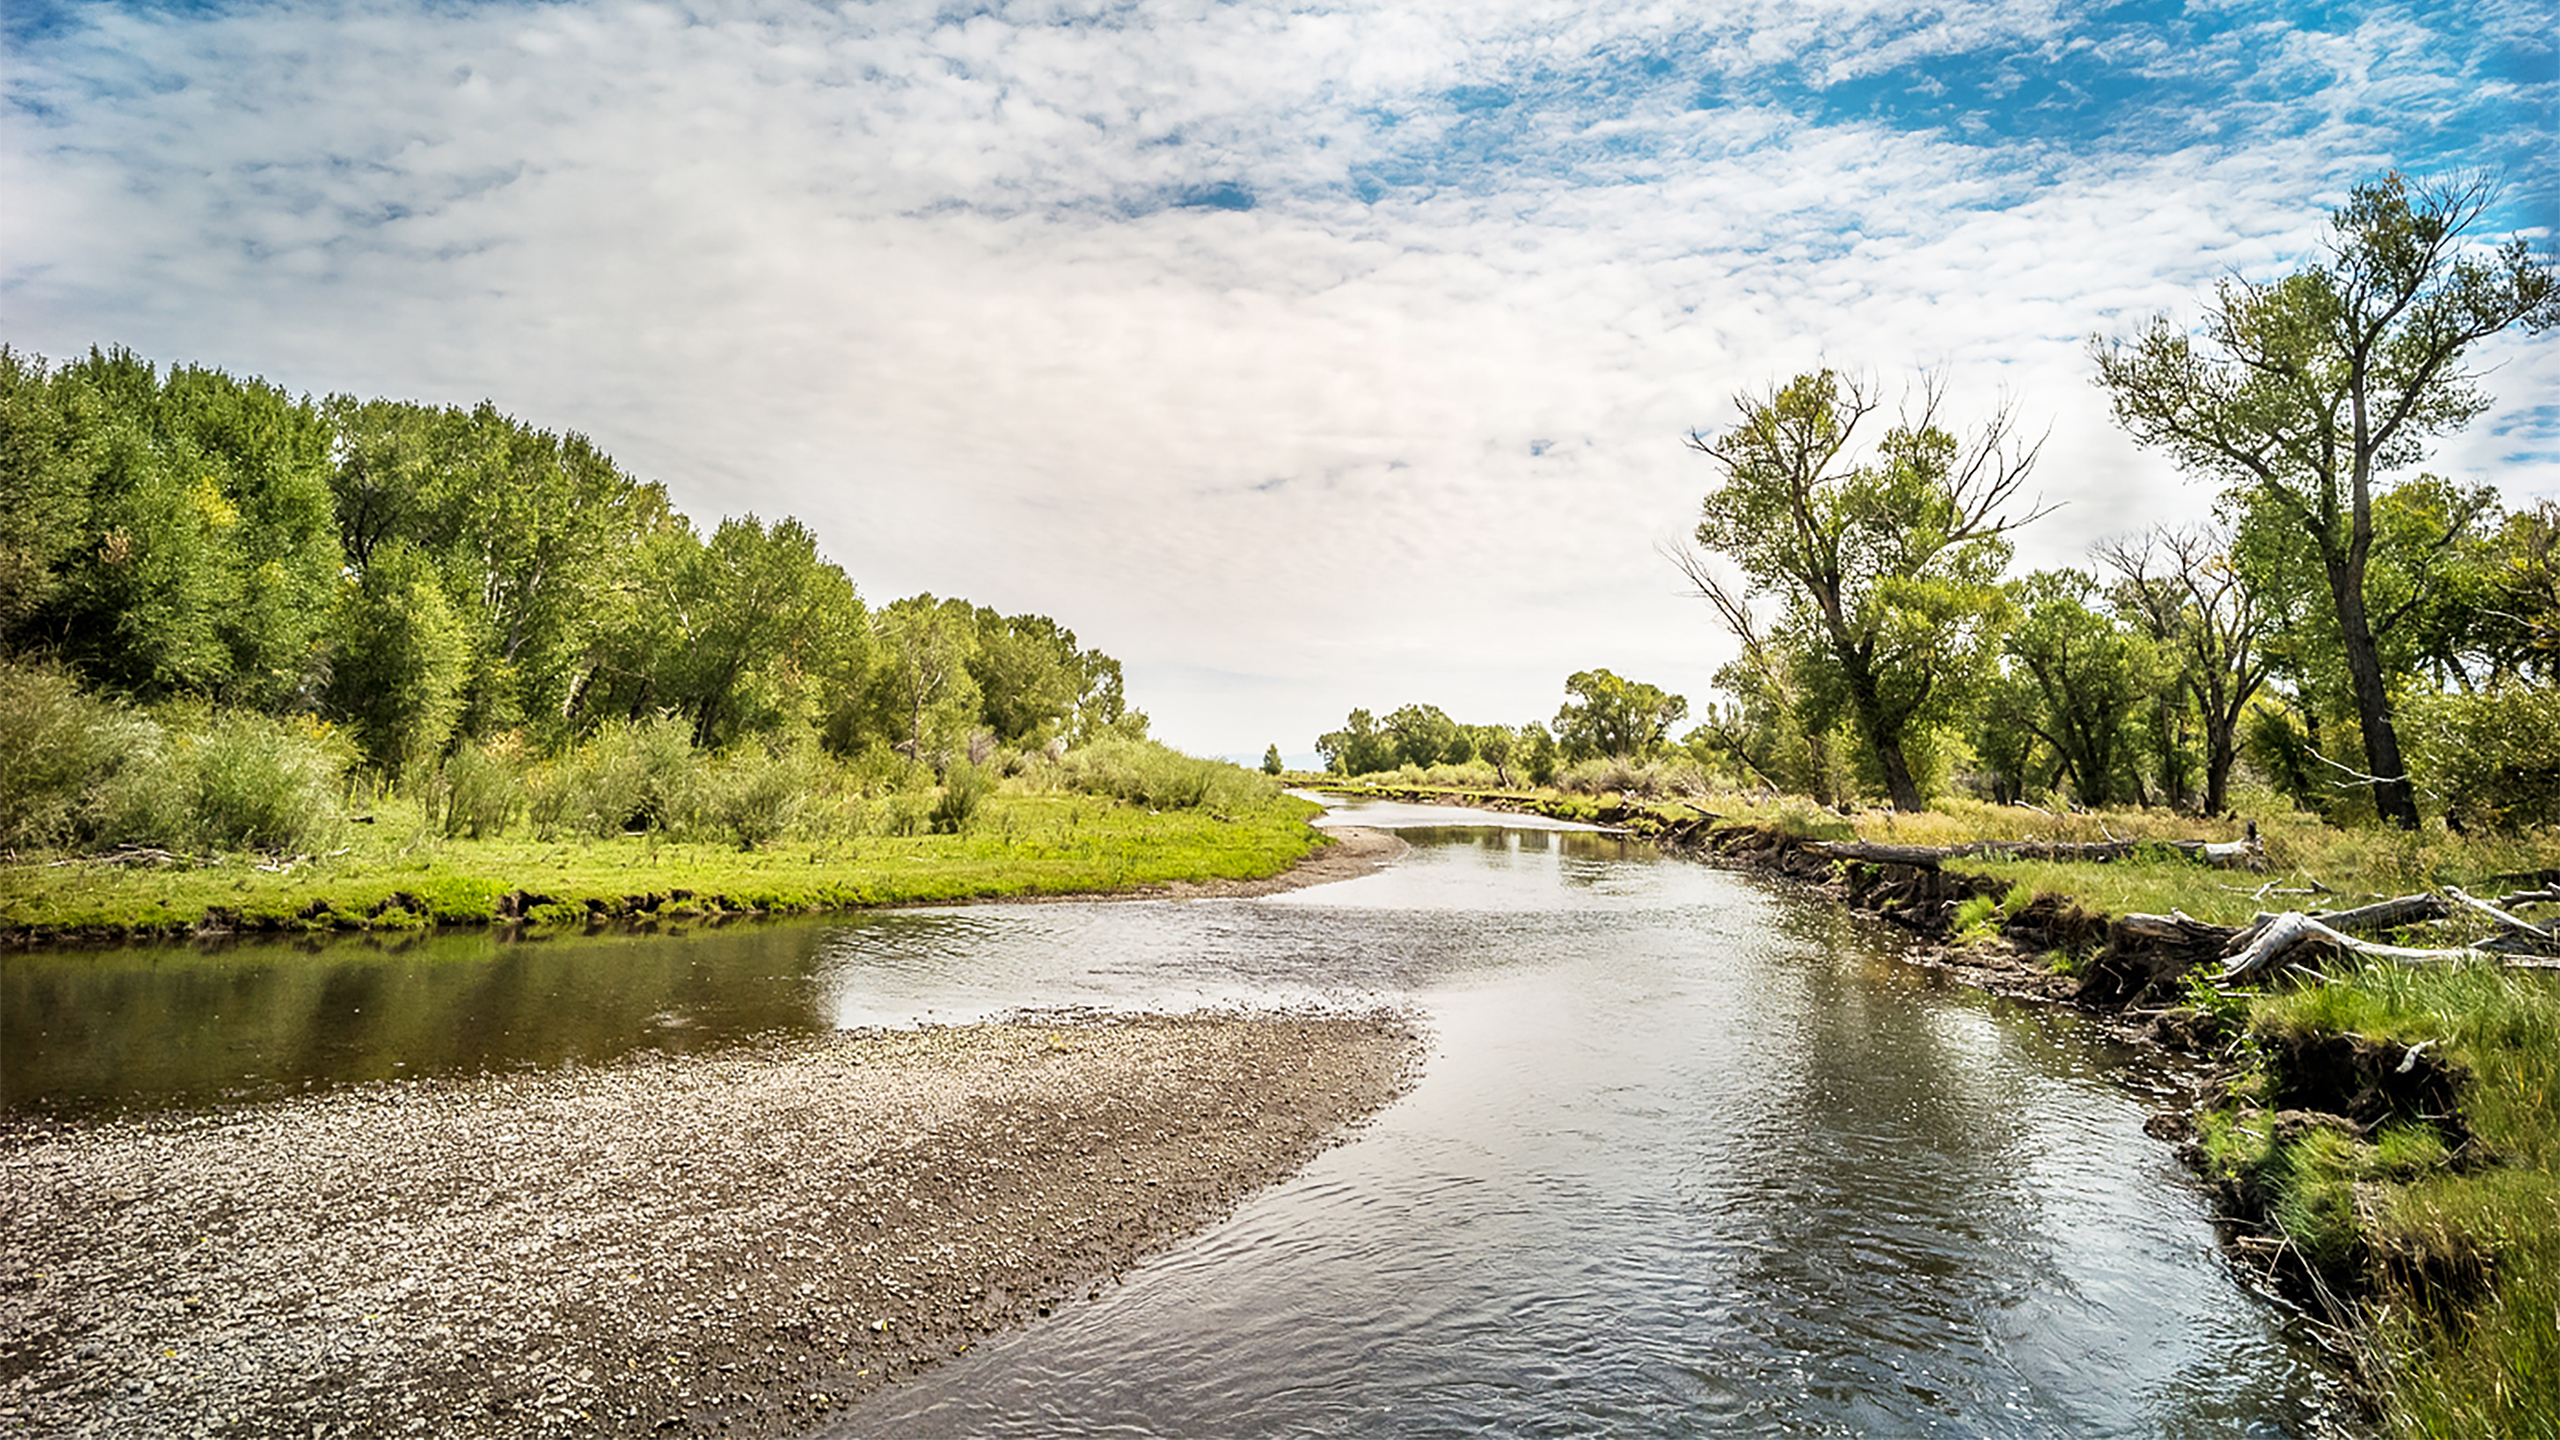 Conejos River, Photo by Russ Schnitzer